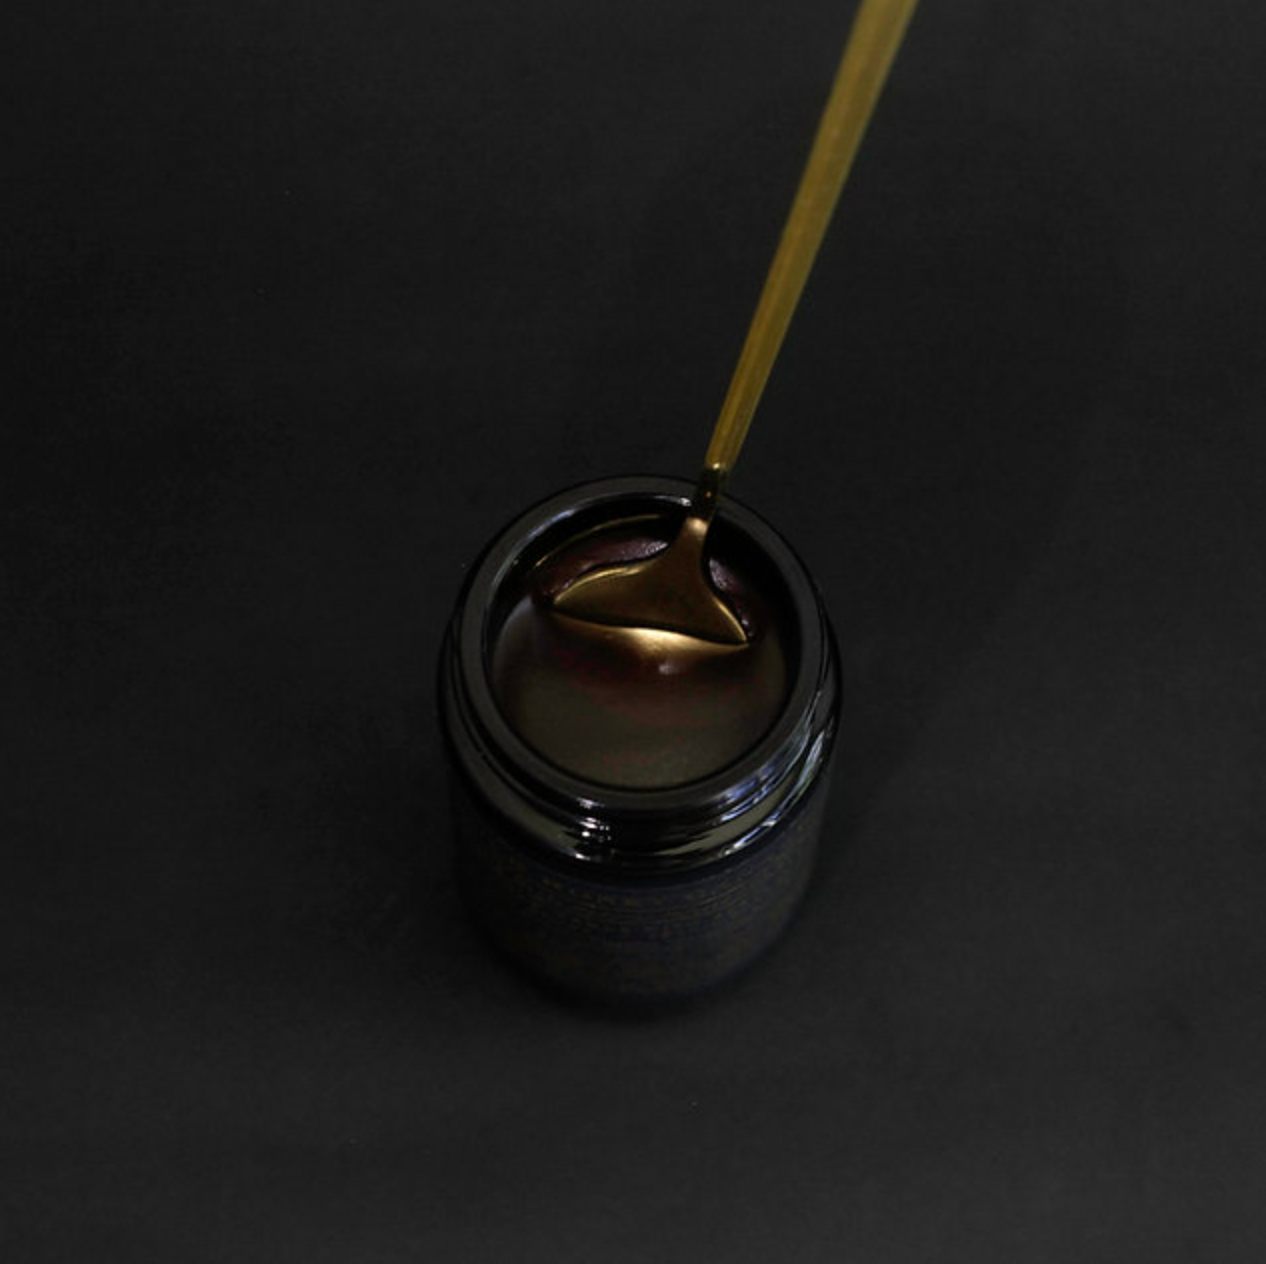 24k Gold Ganache / Egyptian Monatomic Honey, Yantra Medicina